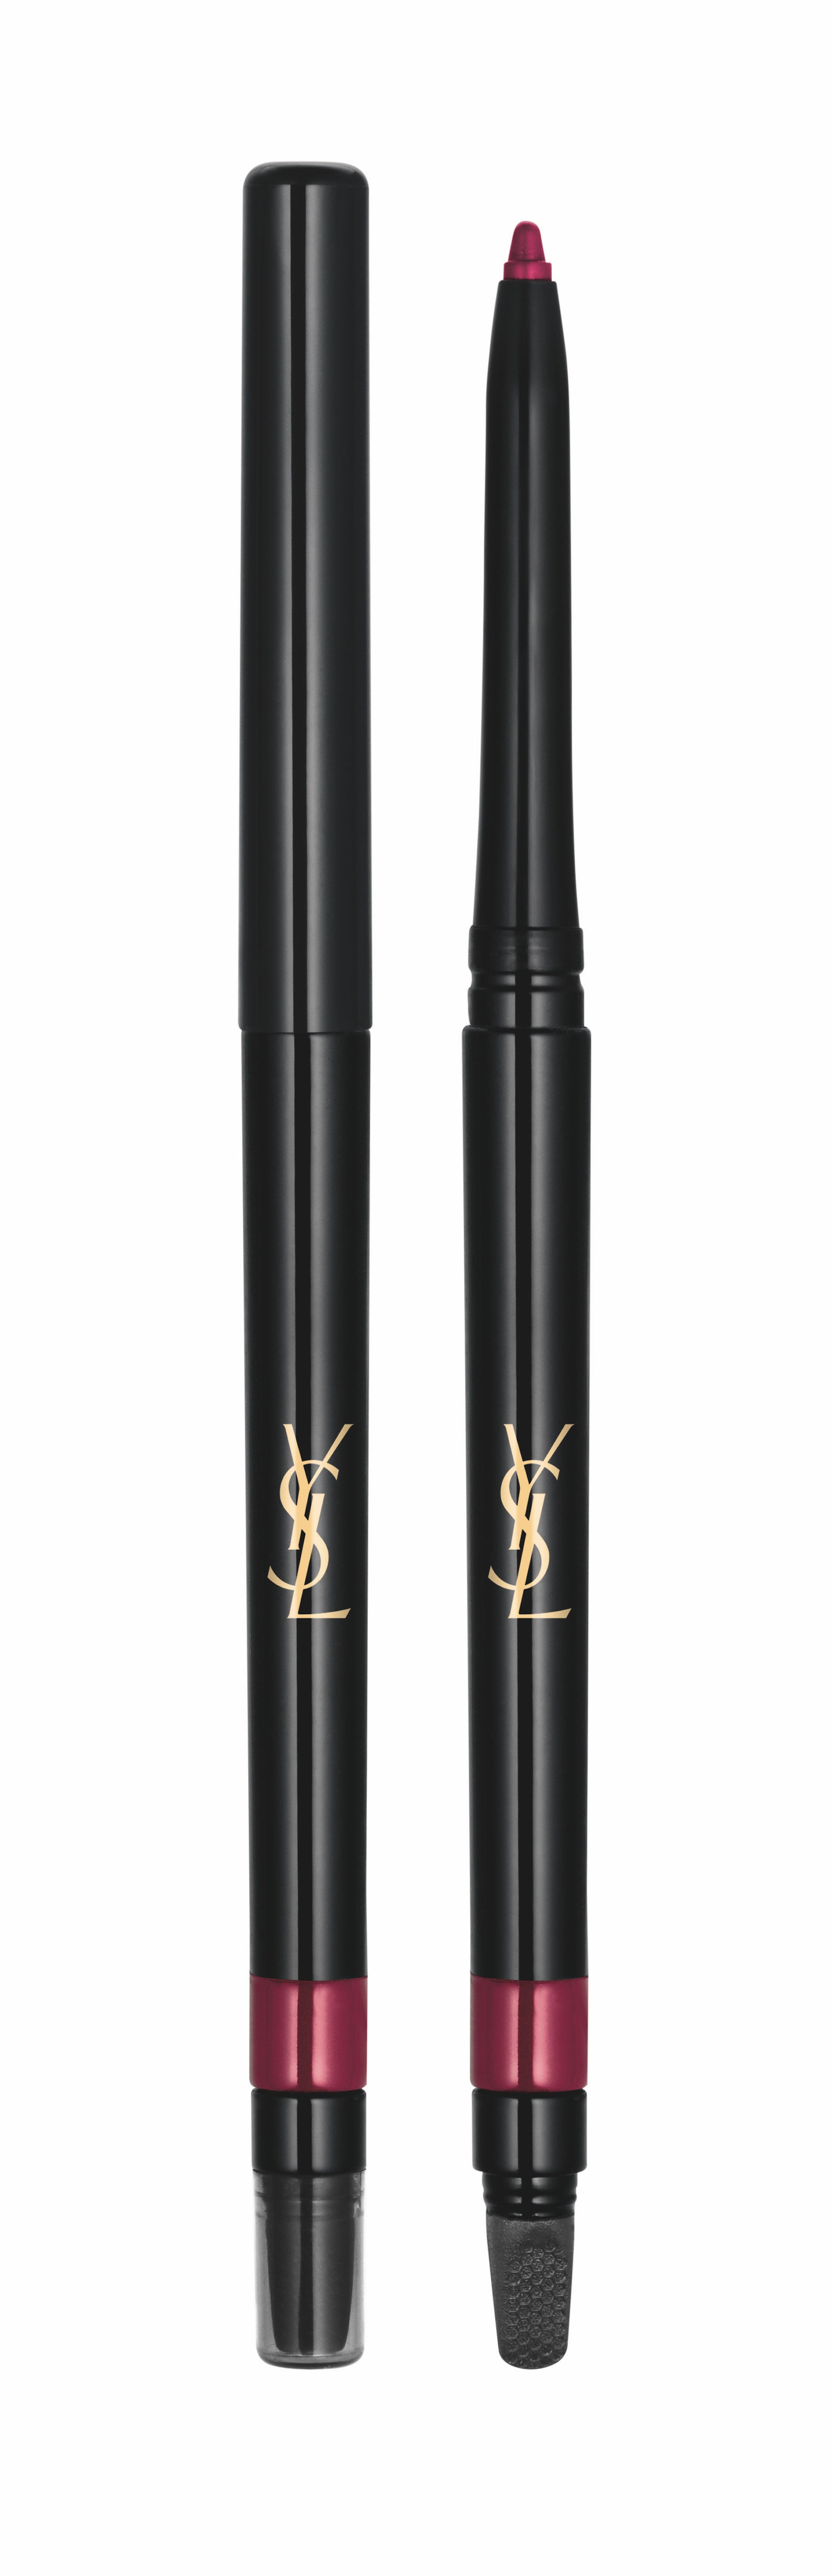 Коллекции макияжа от Yves Saint Laurent Beaut жидкие помады Tatouage Couture и карандаш для губ